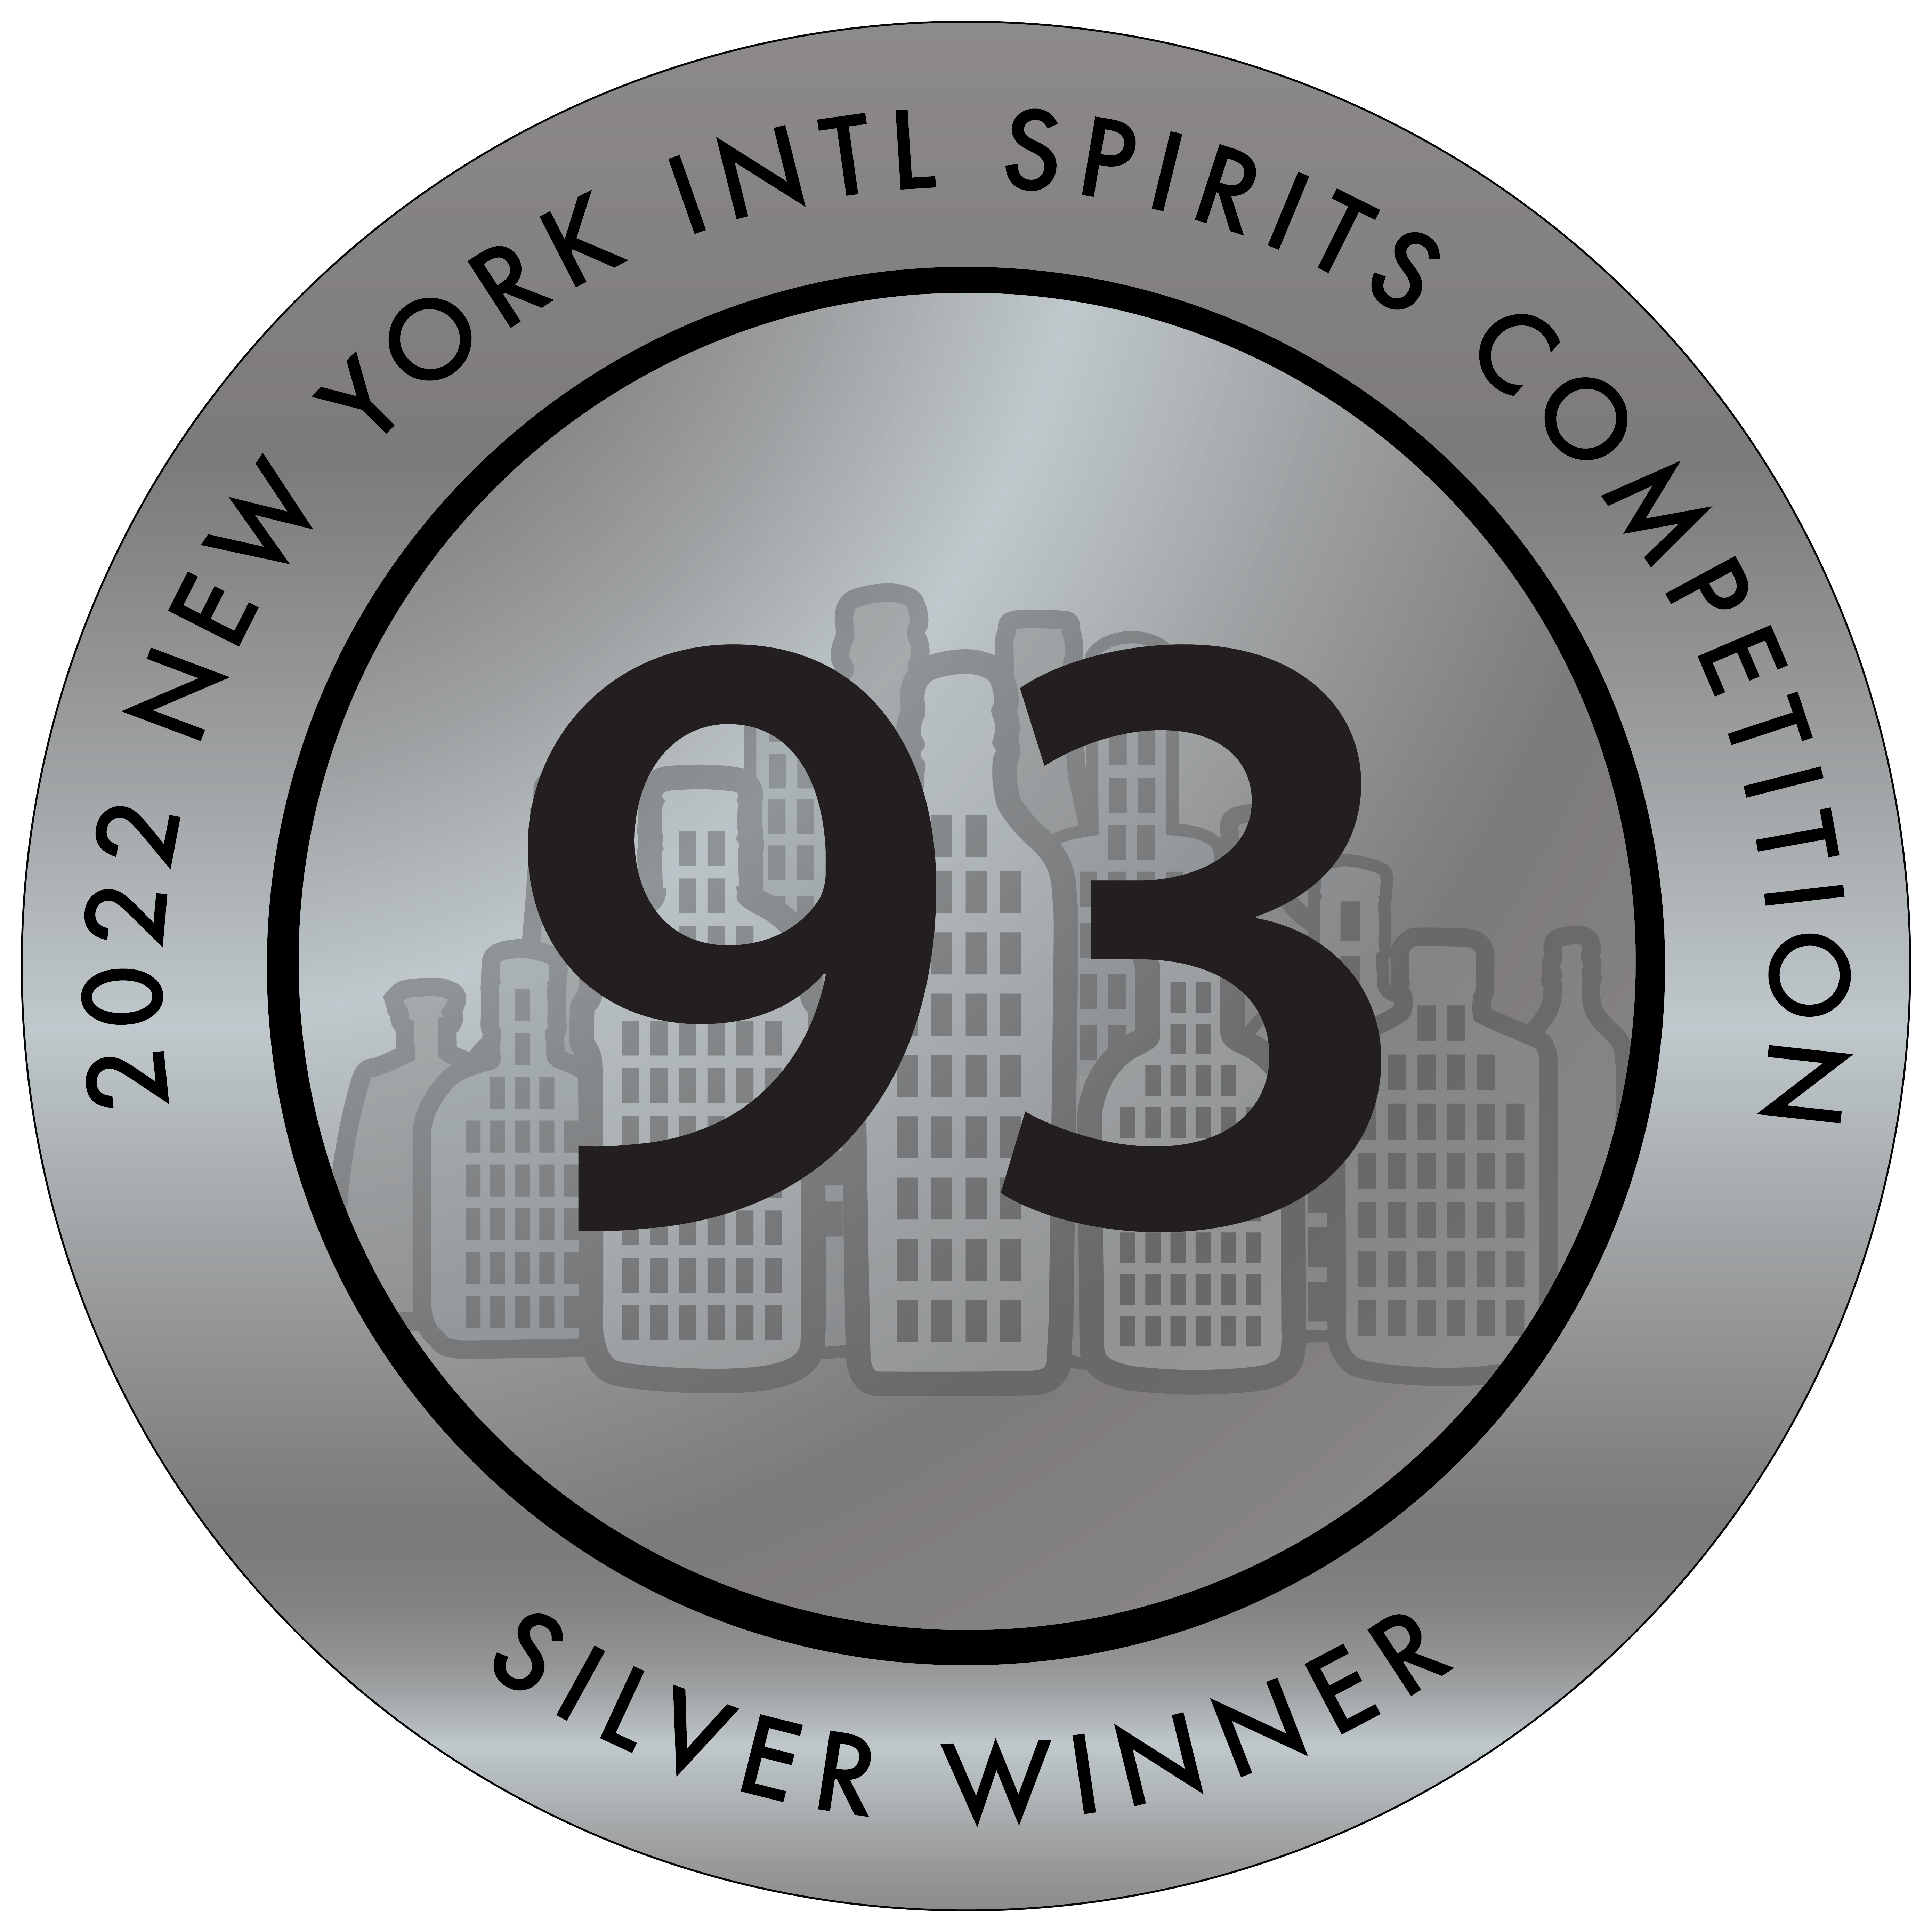 Beehive VSOP NYISC silver award 